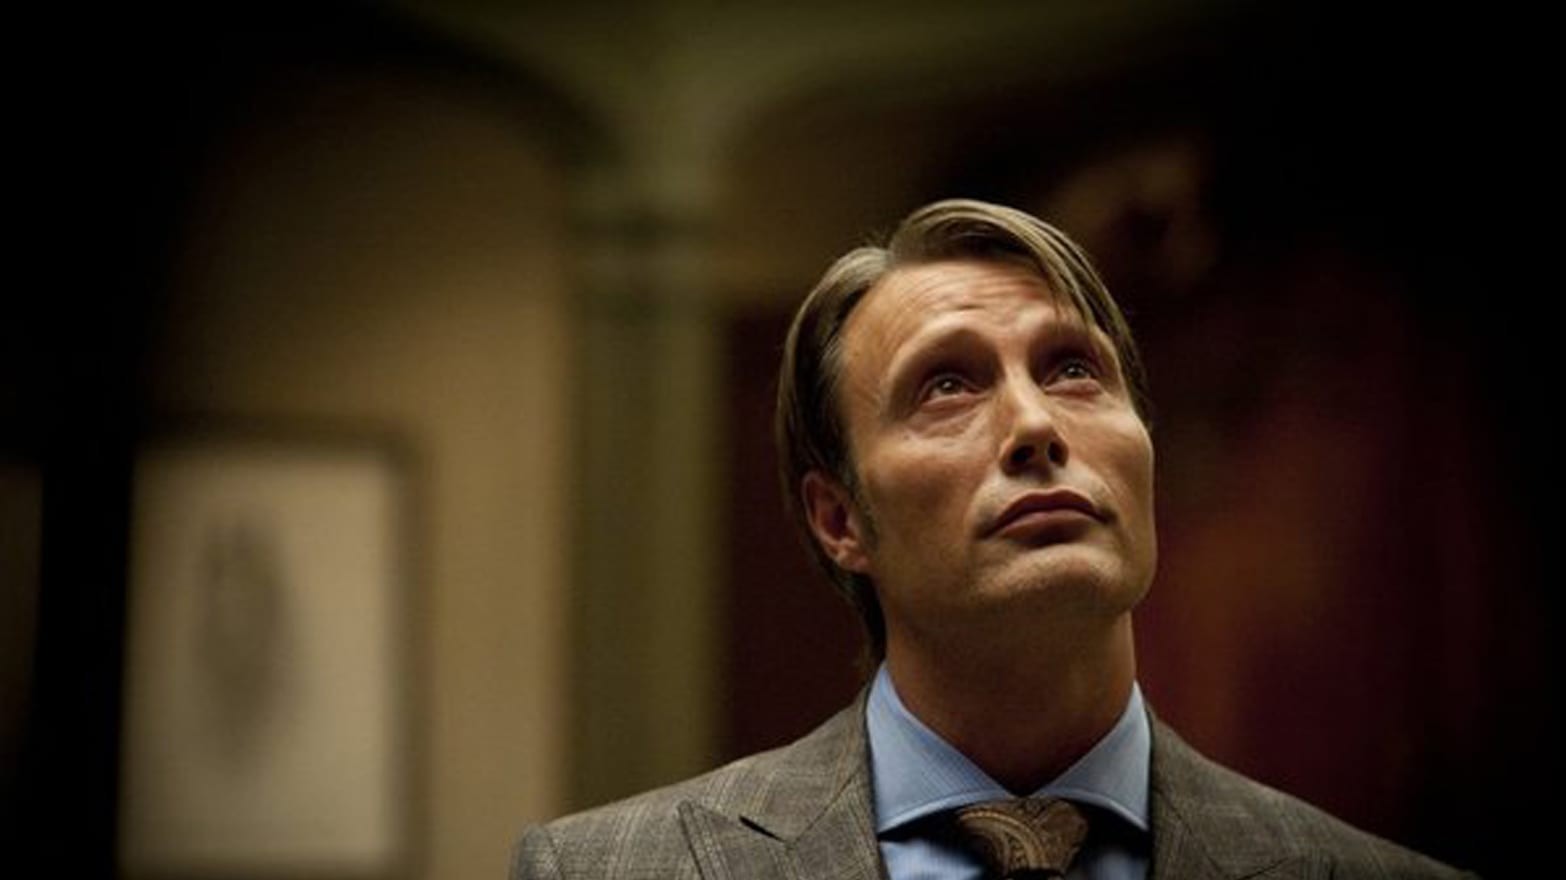 Mads Mikkelsen as Hannibal Lecter in Hannibal